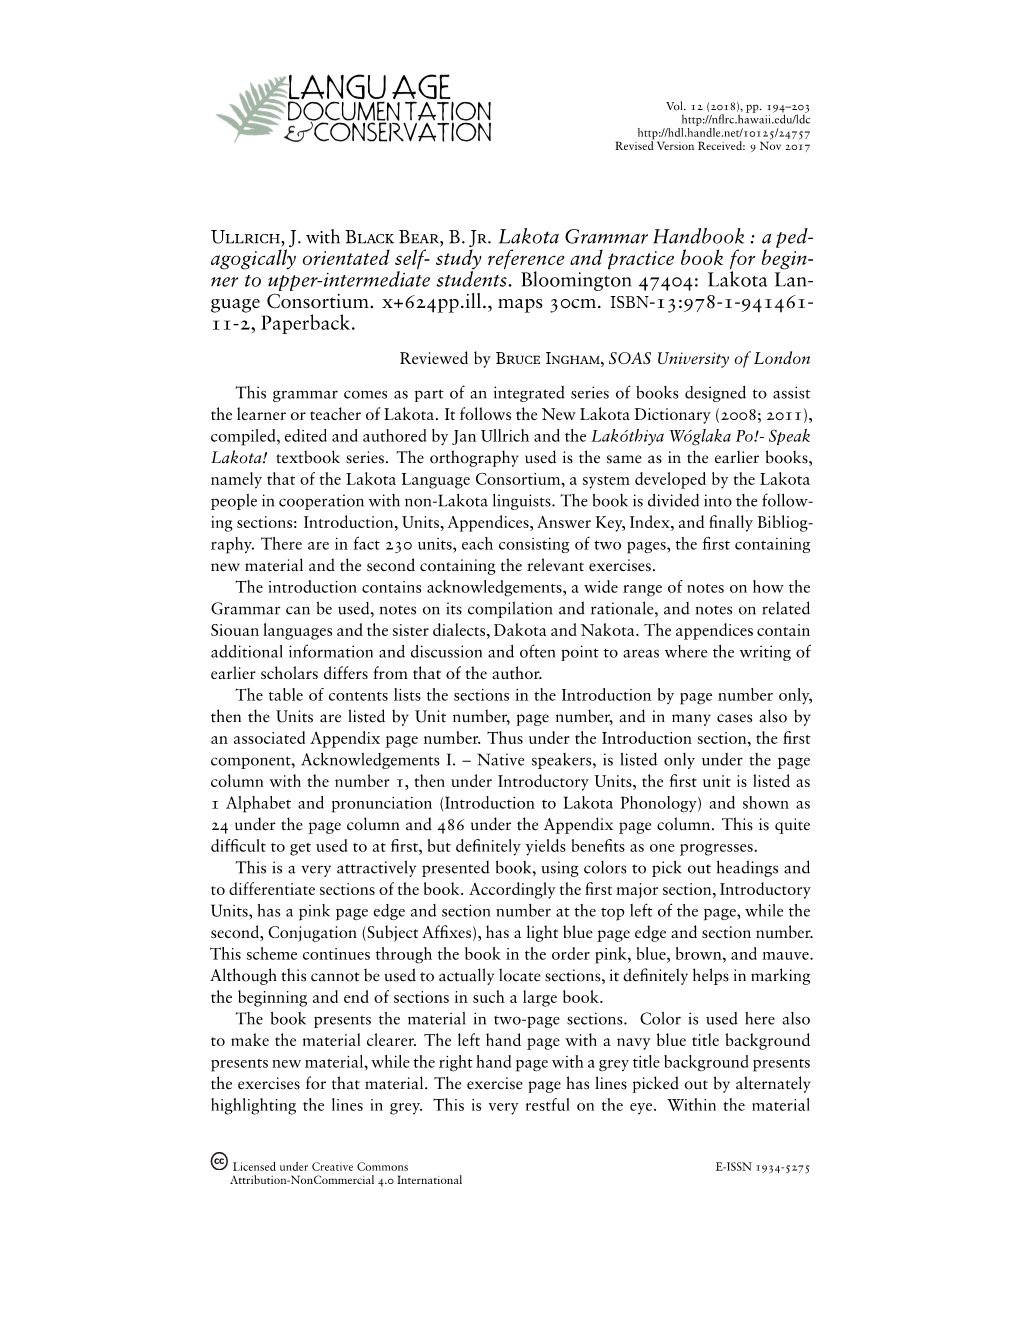 Review of Lakota Grammar Handbook 195